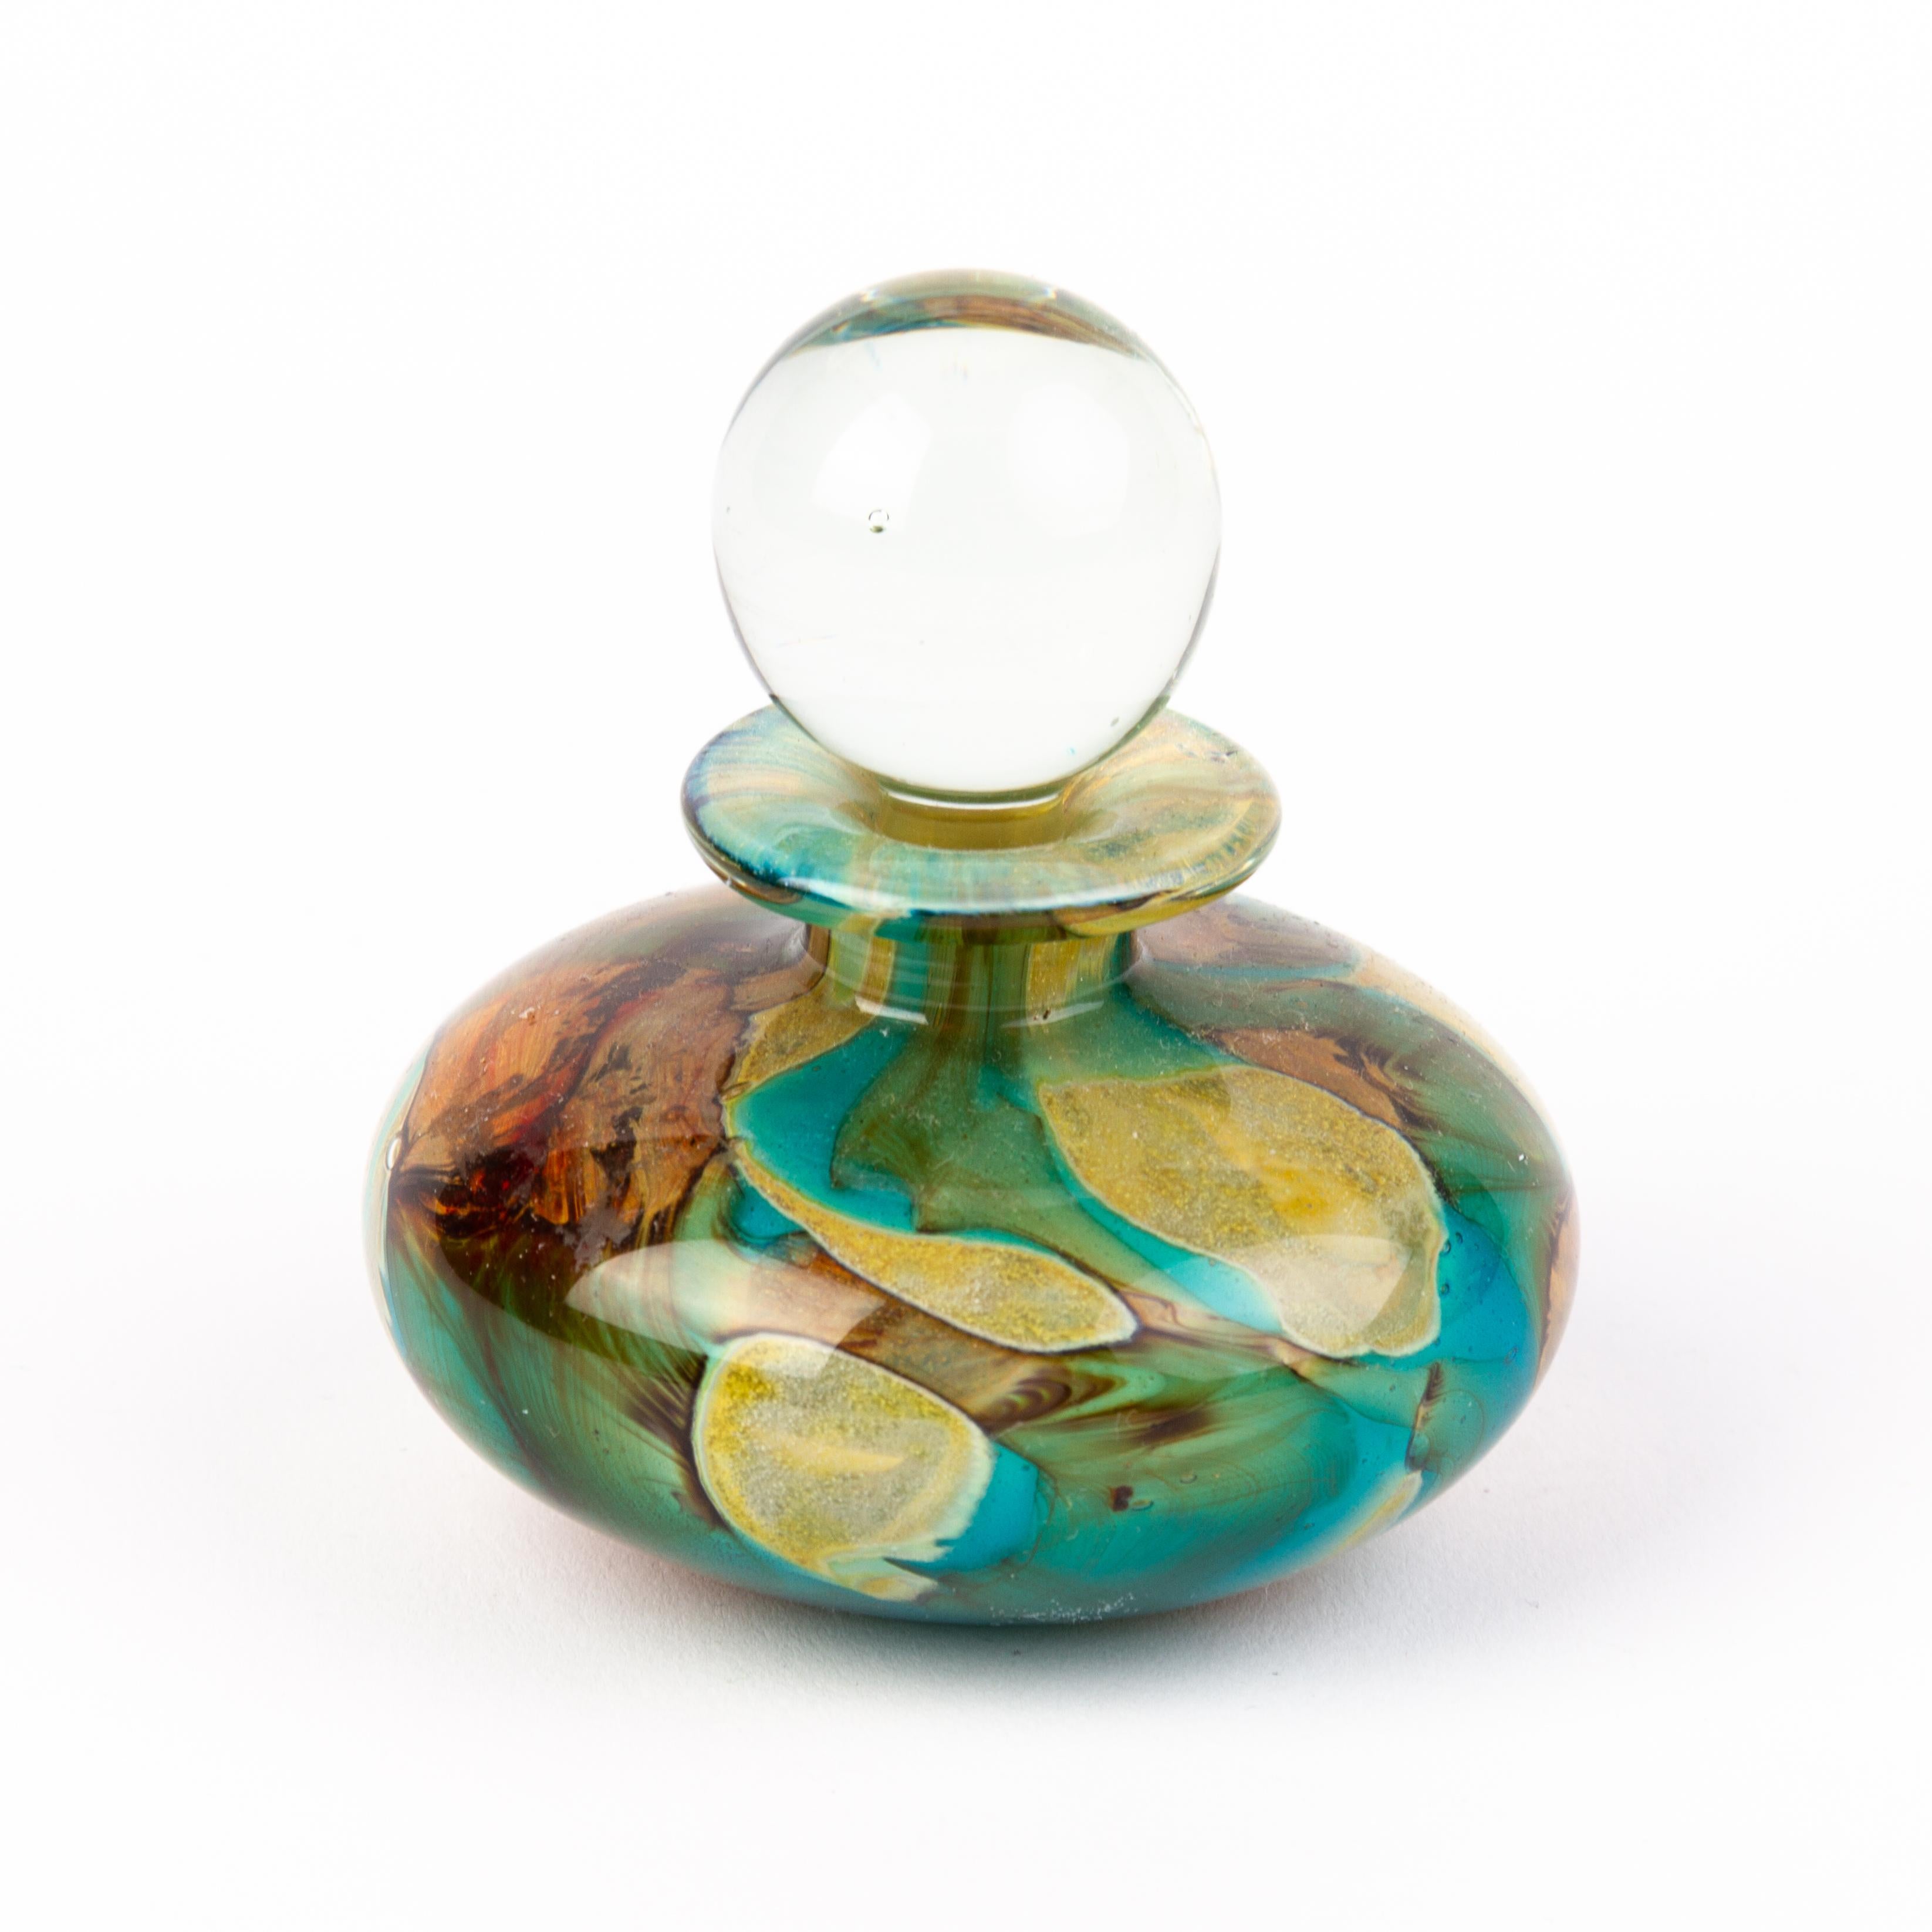 Mdina Maltese Designer Glass Perfume Bottle
Good condition
Free international shipping.